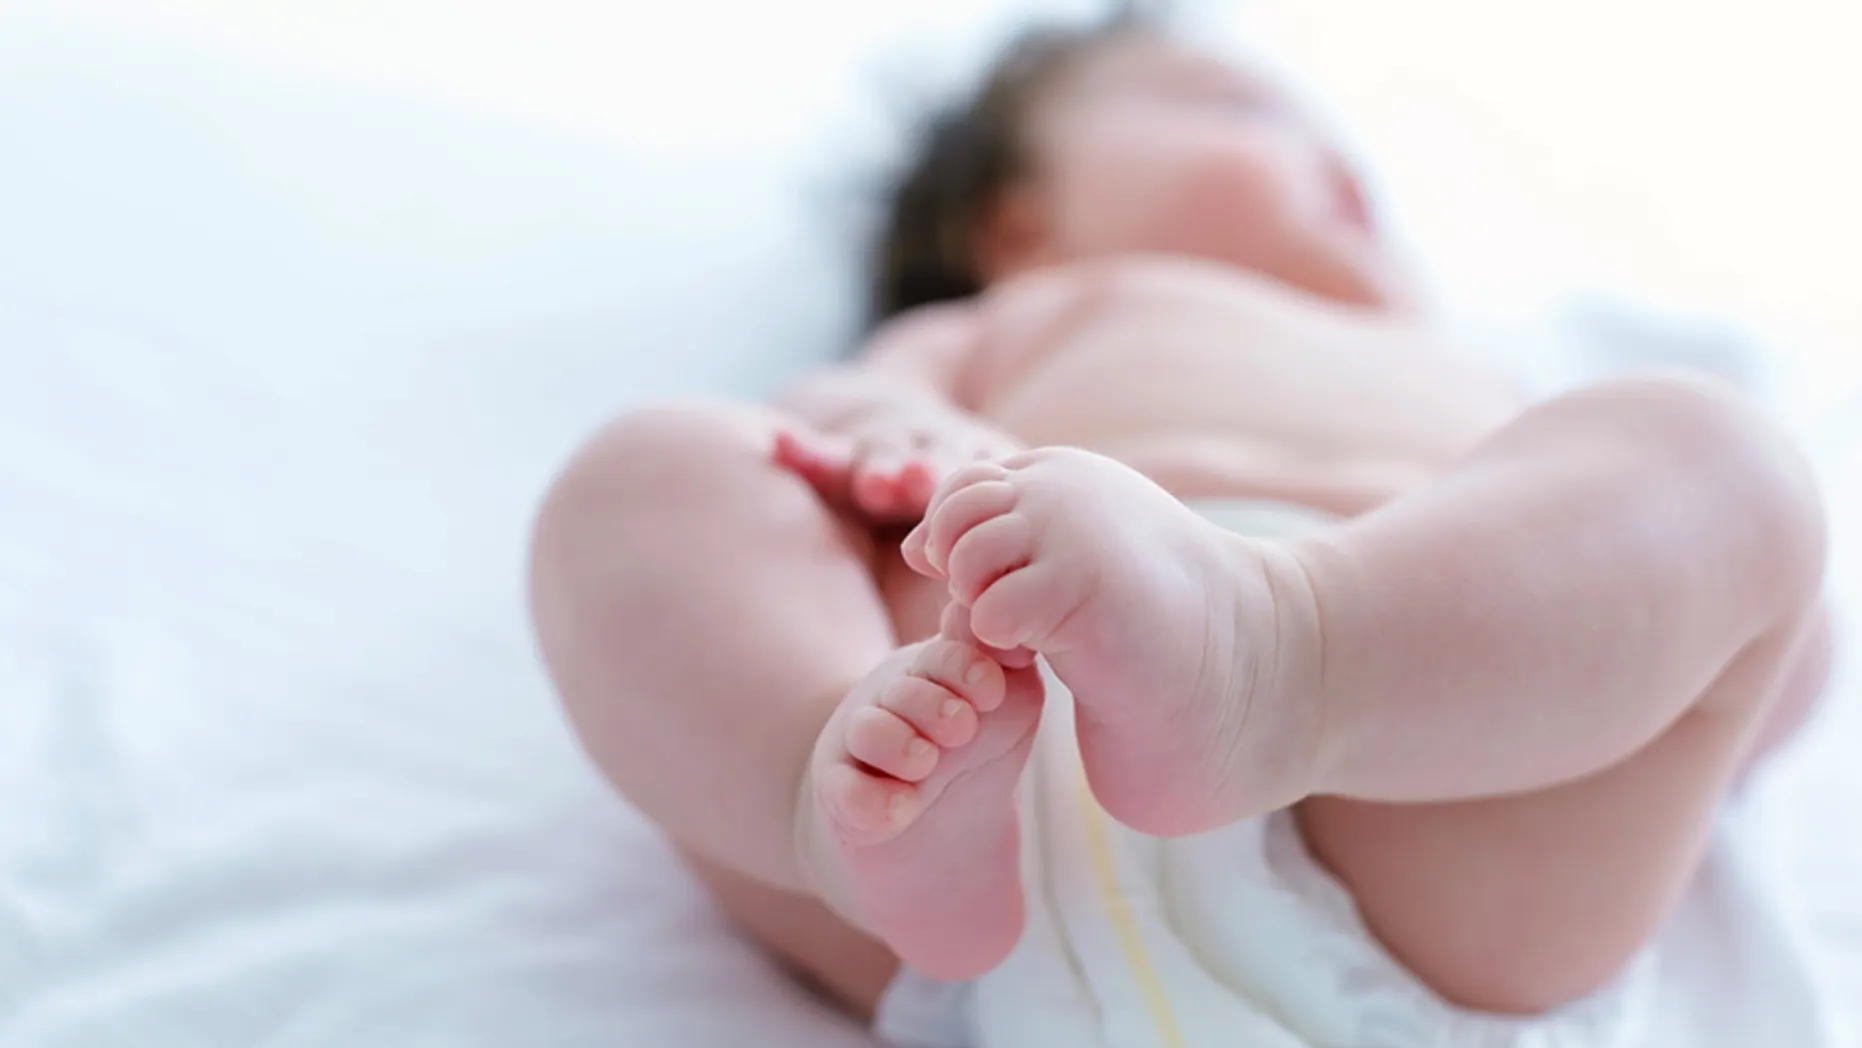 Baby Boy تحديد العلامات الحيوية المحتملة لمتلازمة موت الرضع المفاجئ (SIDS) مجلة نقطة العلمية